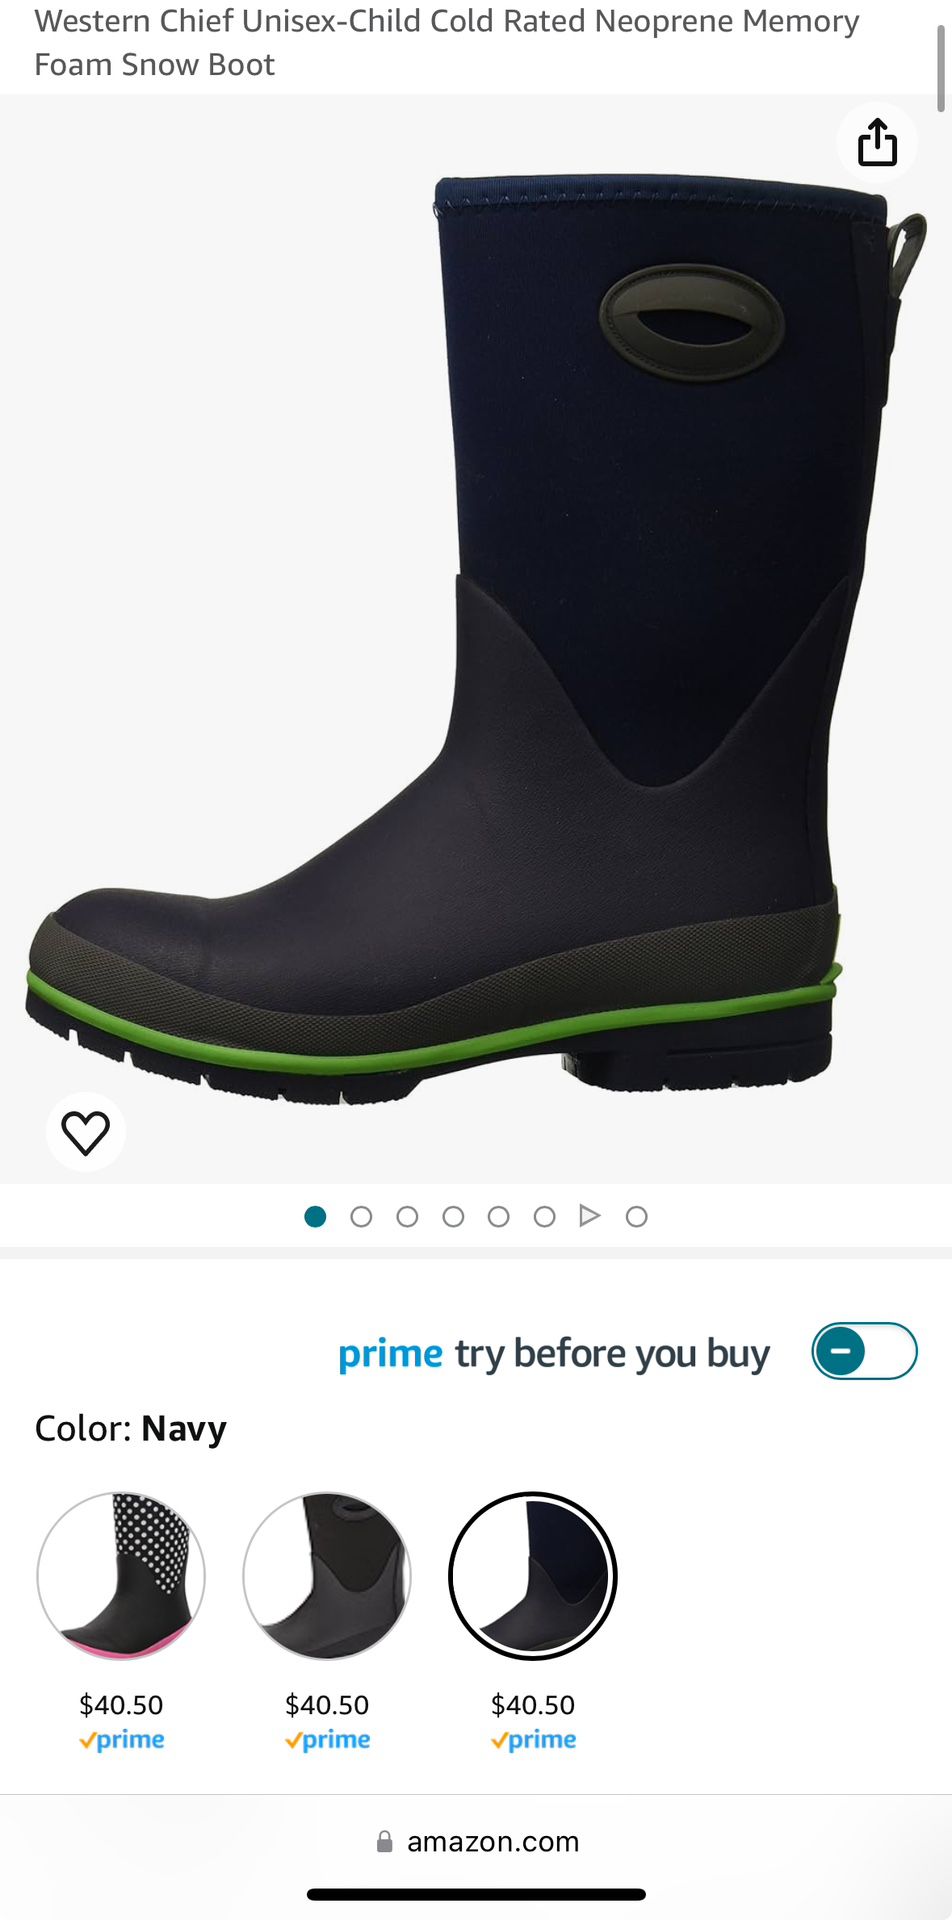 Big Kids Size 6 Western Chief Navy Blue Snow/Waterproof boots